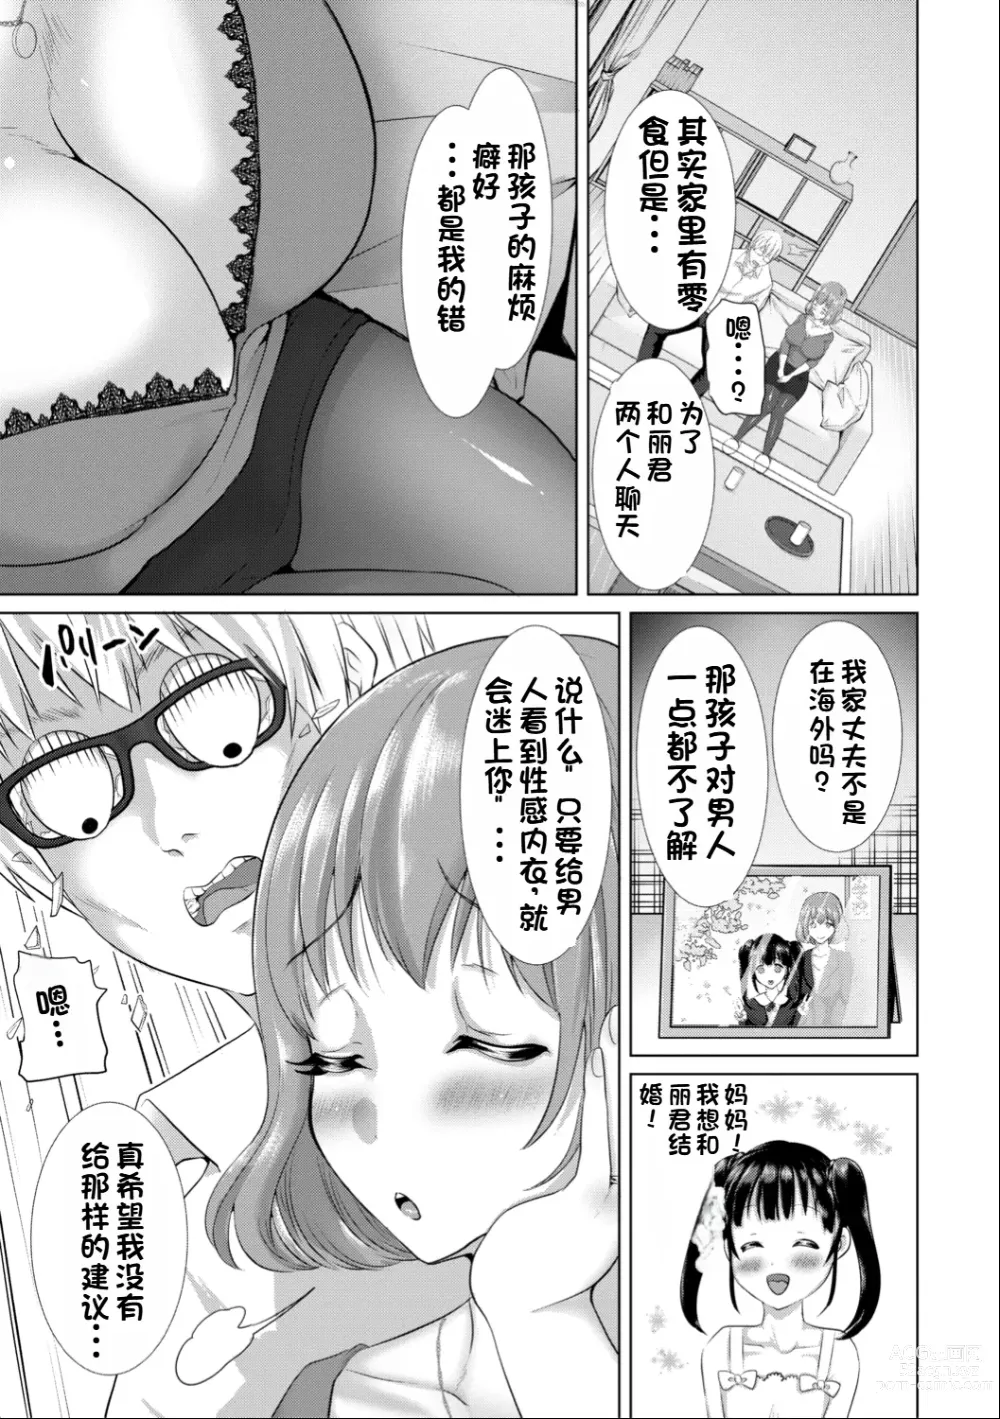 Page 6 of manga Suki Ara Ba Eroi Sitagi Wo Mi Setuke Te Kuru Seiso Bitti Oyako.